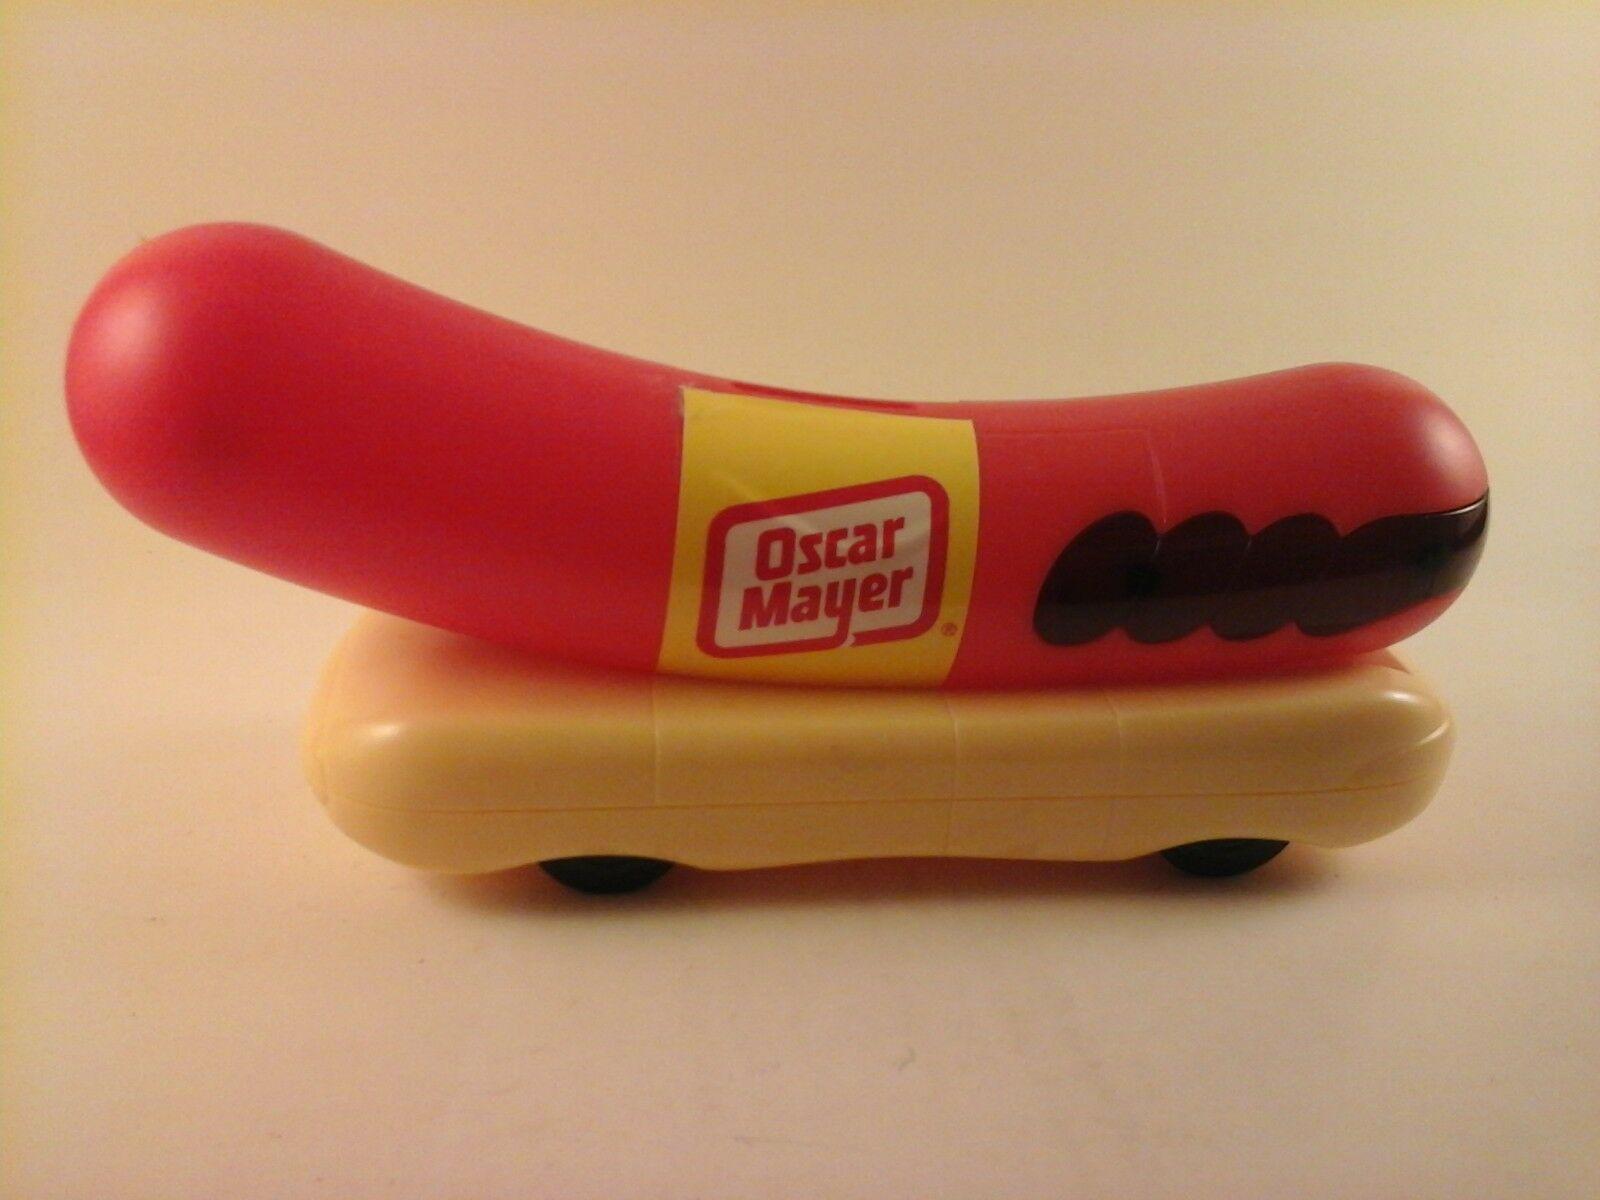 Vintage Oscar Mayer Logo - VINTAGE OSCAR MAYER Wiener Hot Dog Wienermobile Plastic Mobile Piggy